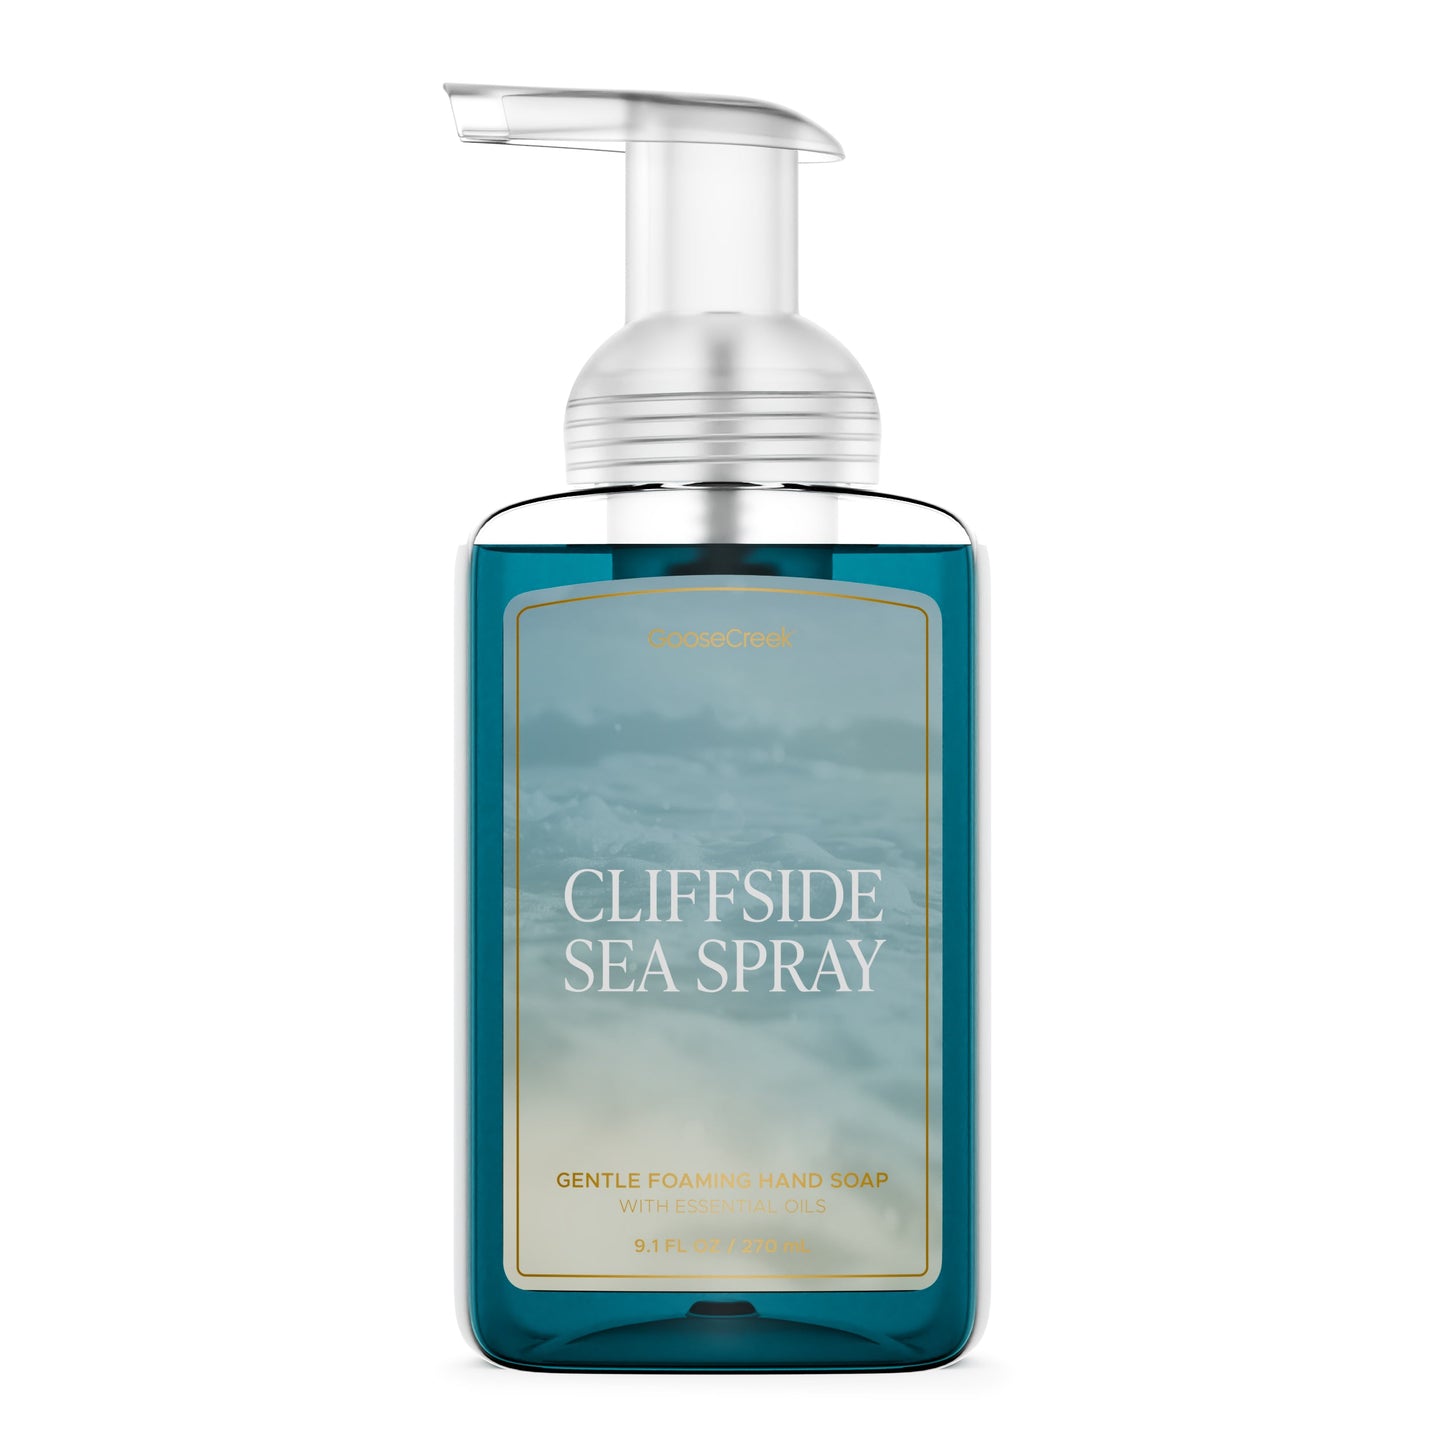 Cliffside Sea Spray Lush Foaming Hand Soap